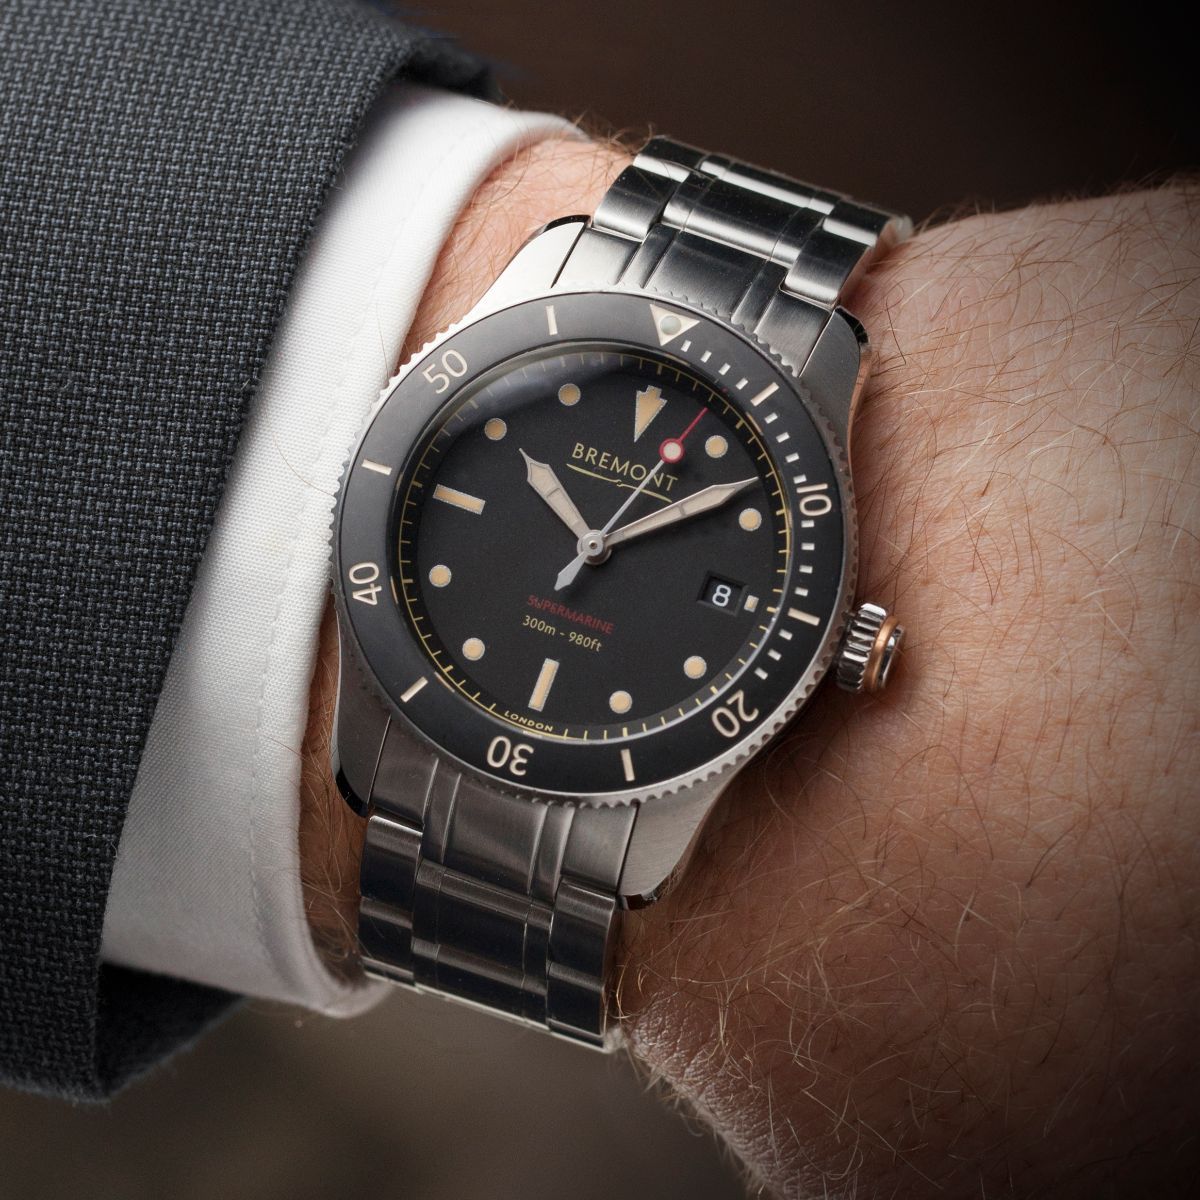 Bremont Chronometers Watches | Mens | Supermarine S301